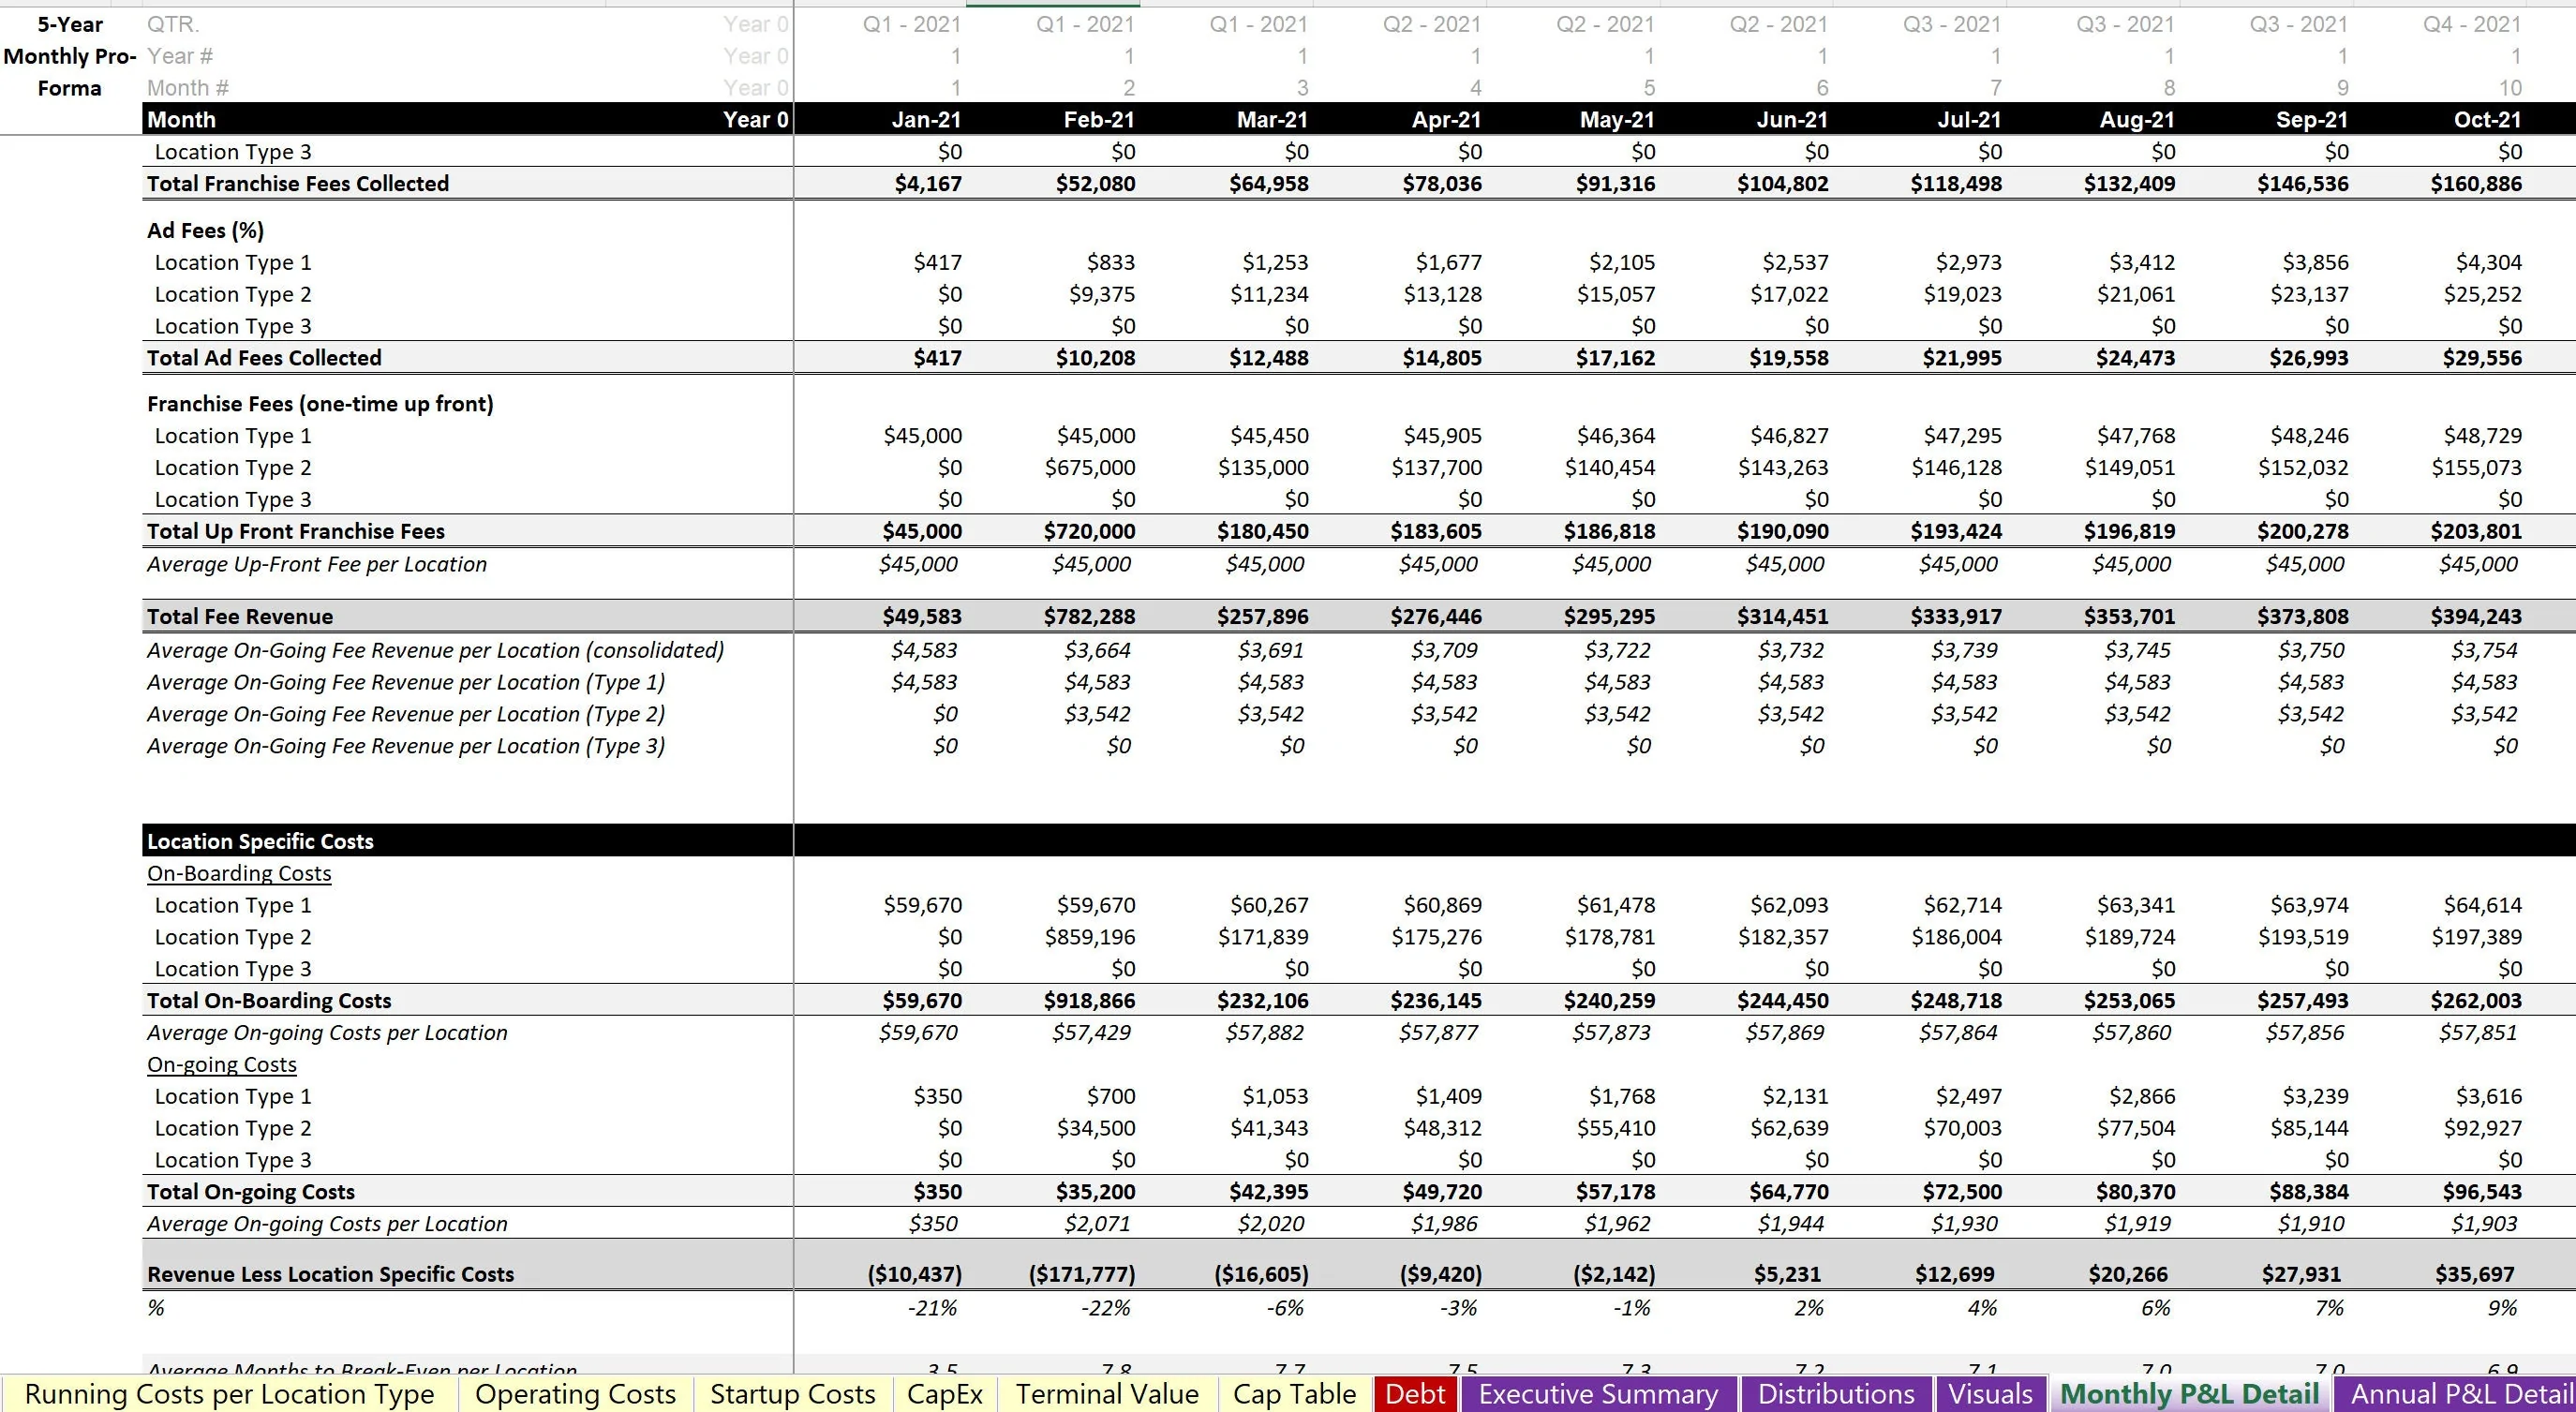 Franchisor Licensing Financial Model (Excel workbook (XLSX)) Preview Image